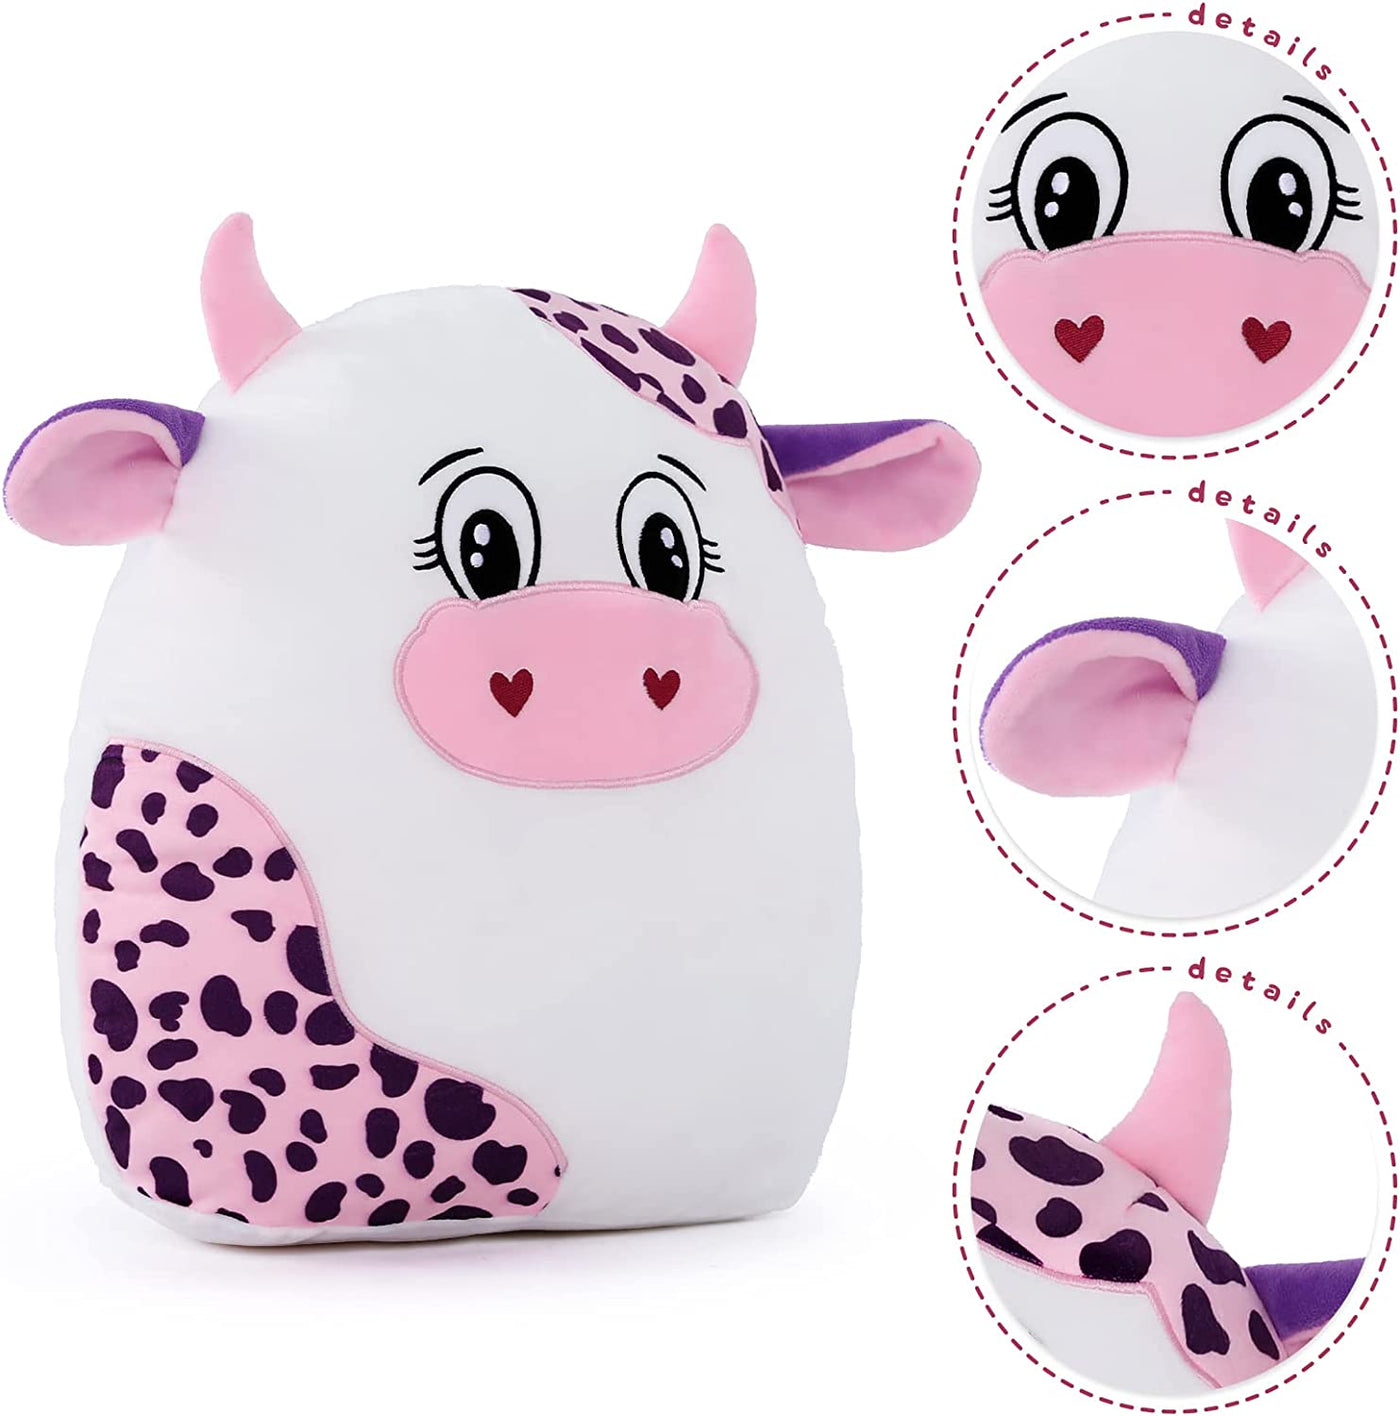 Cow Plush Toy Throw Pillow, 14 Inches